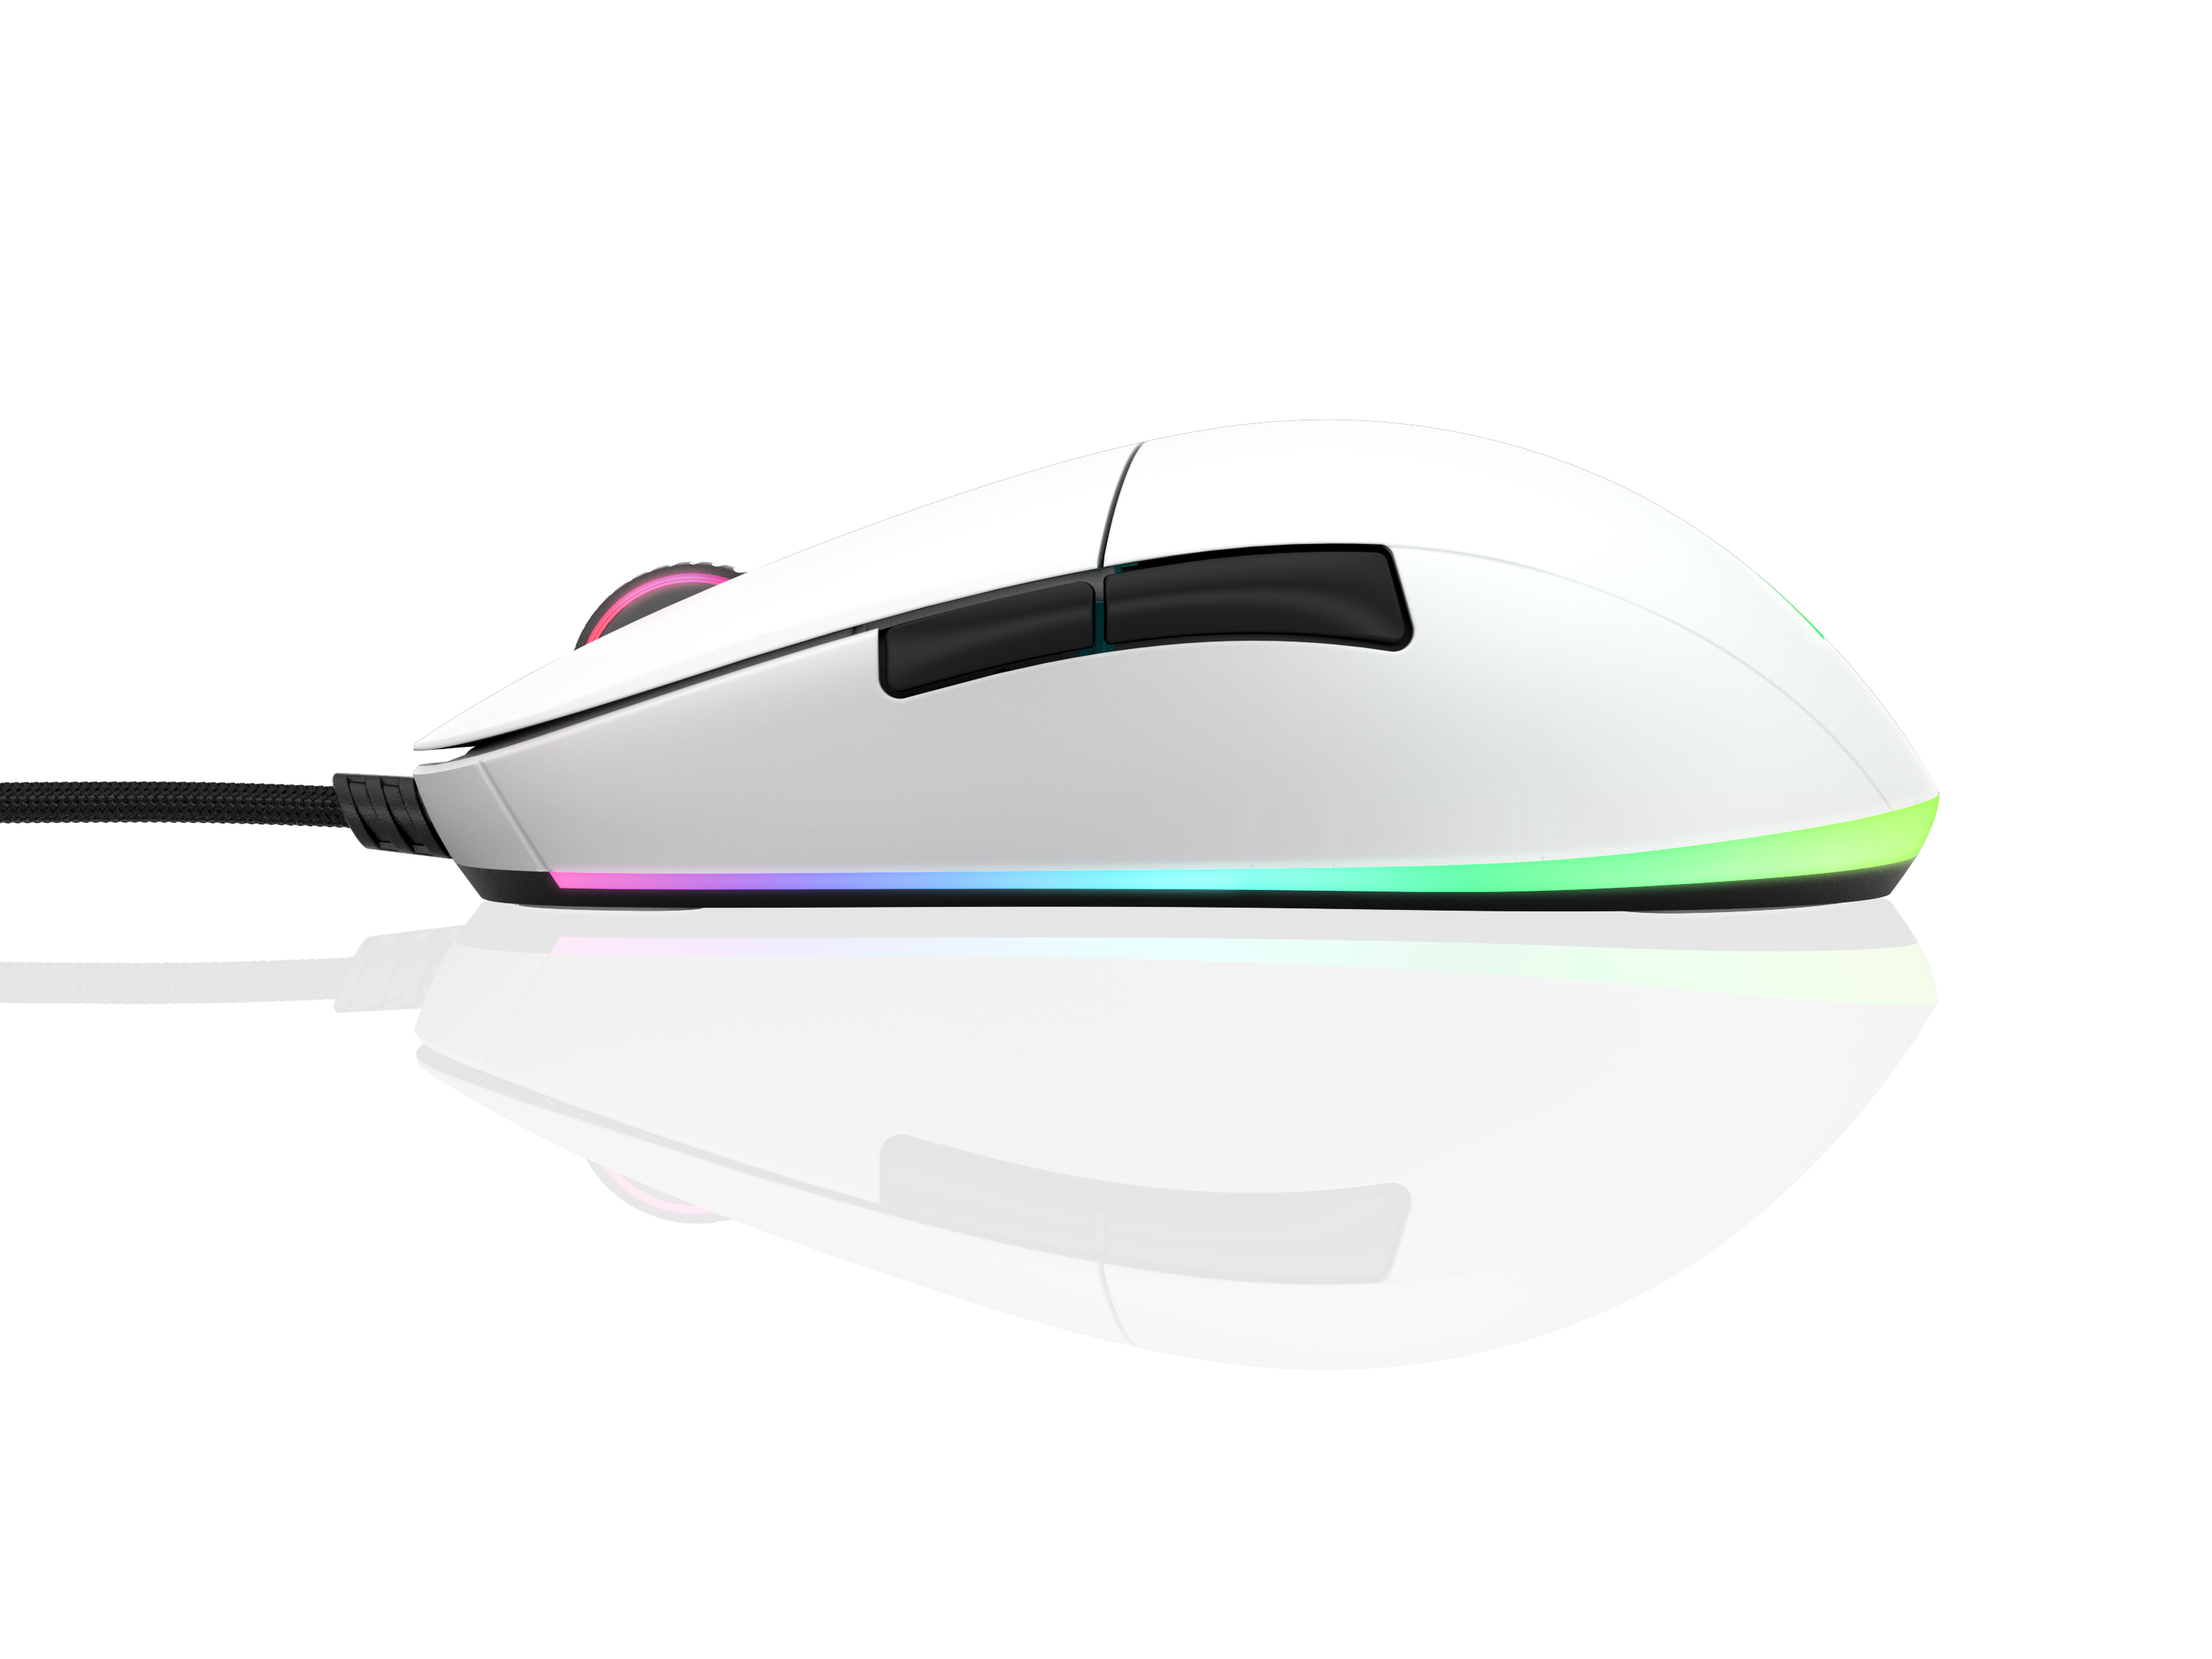 Endgamegear - XM1 RGB Gaming Mouse - White